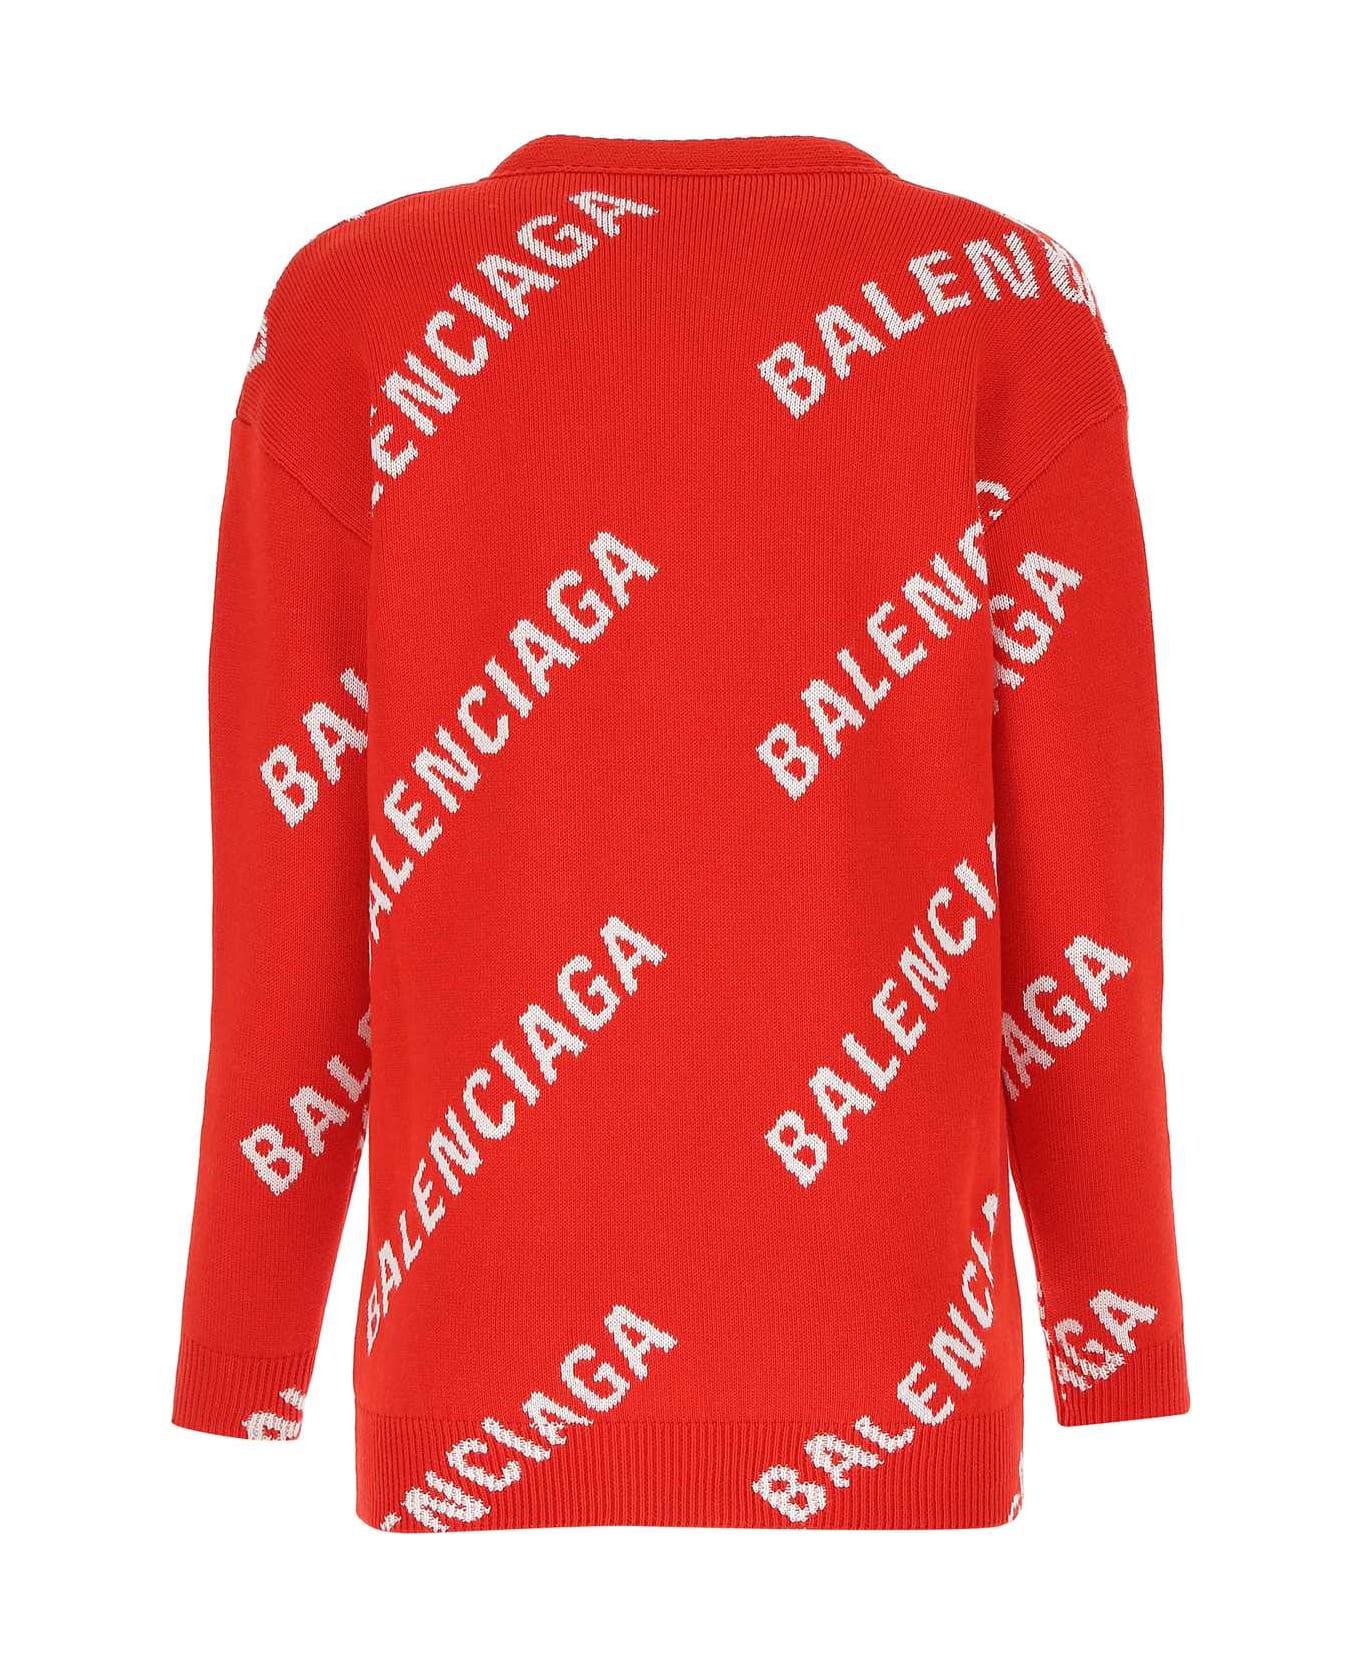 Balenciaga Embroidered Stretch Cotton Blend Oversize Cardigan - REDWHITE